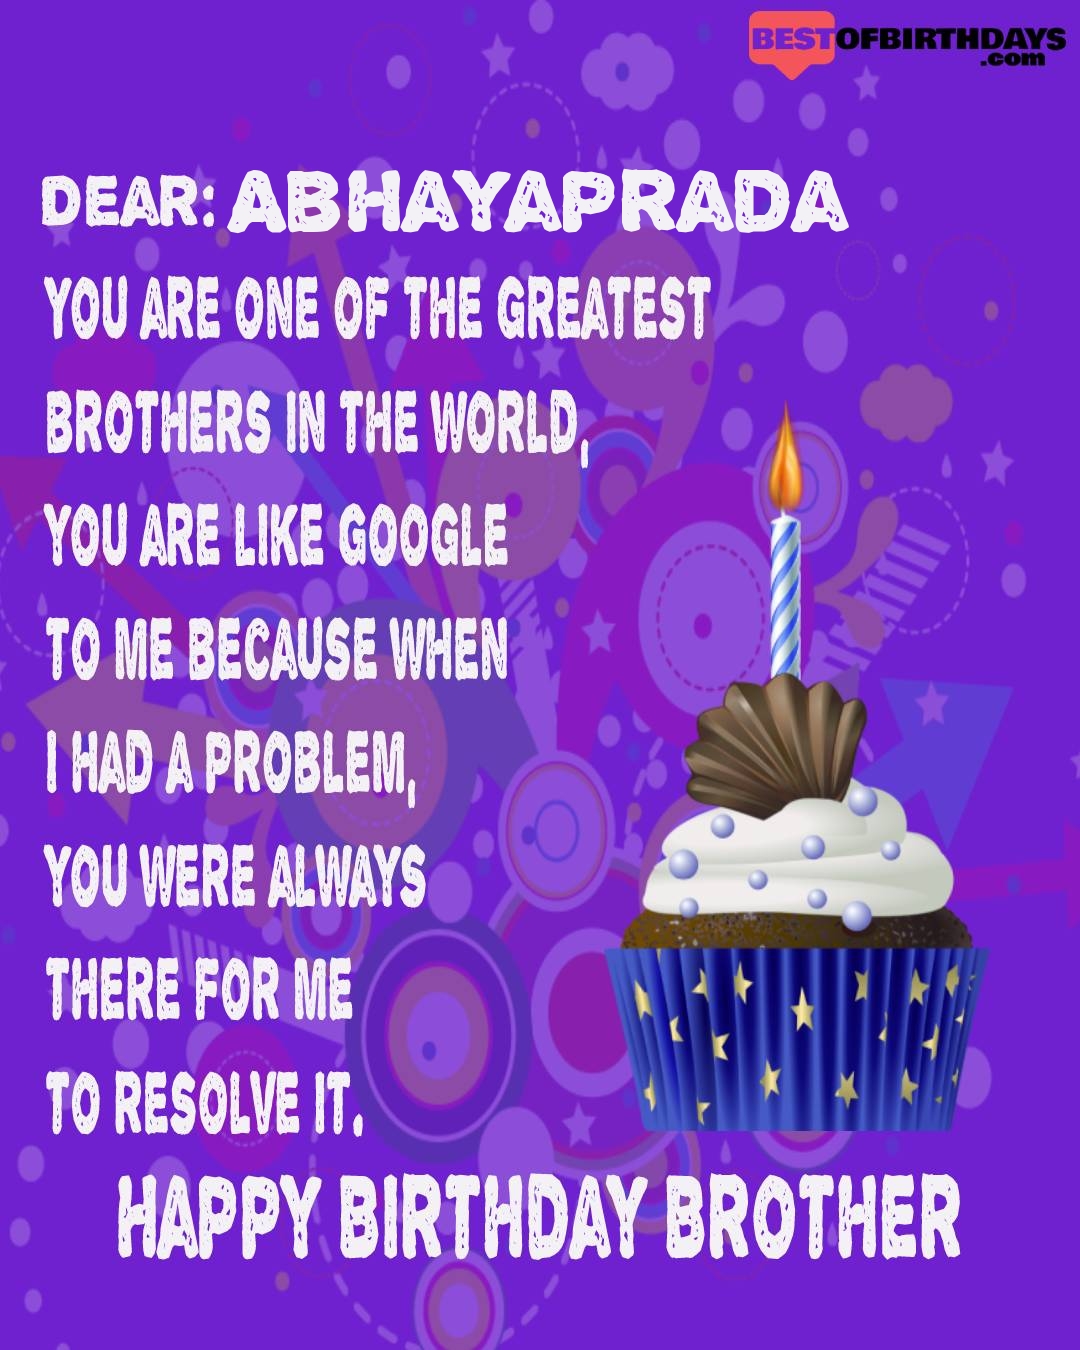 Happy birthday abhayaprada bhai brother bro